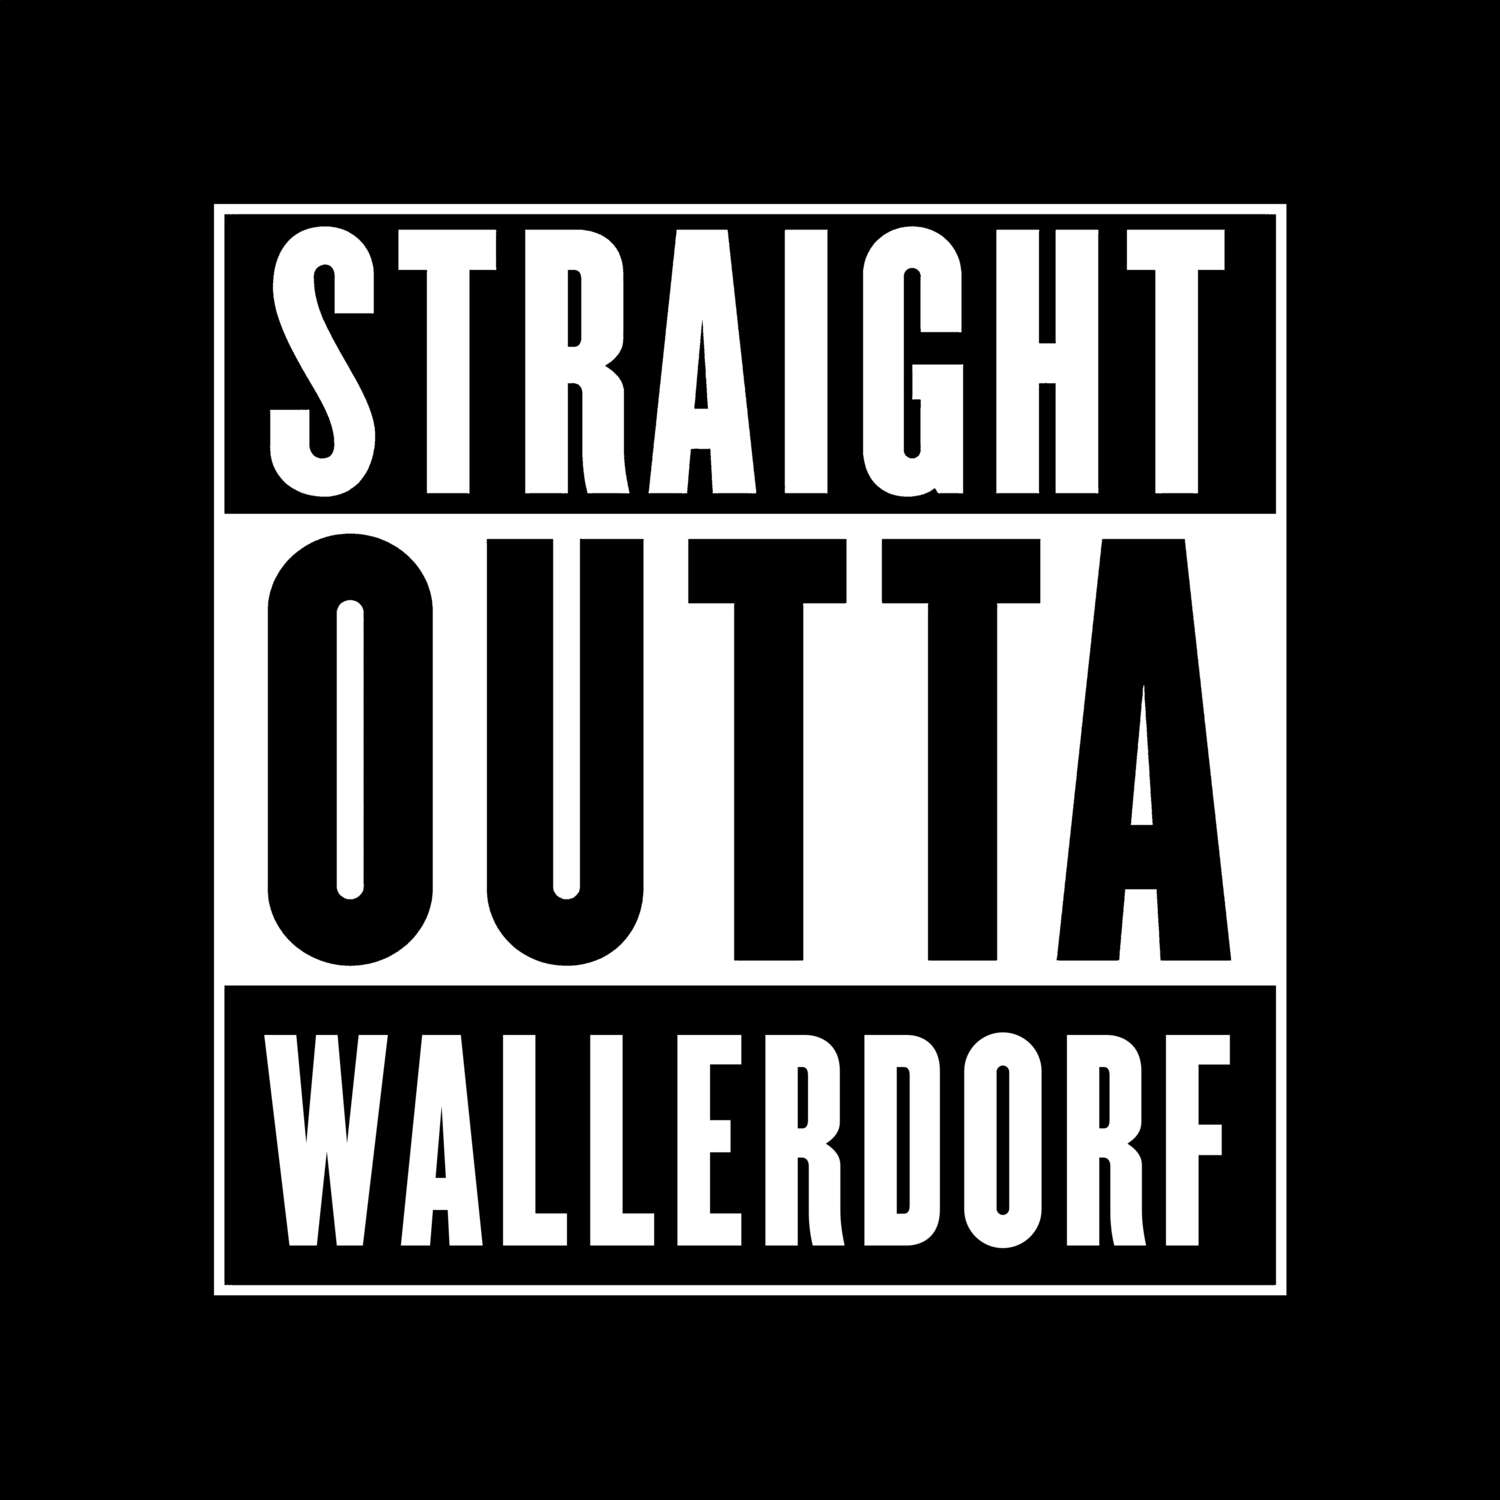 Wallerdorf T-Shirt »Straight Outta«